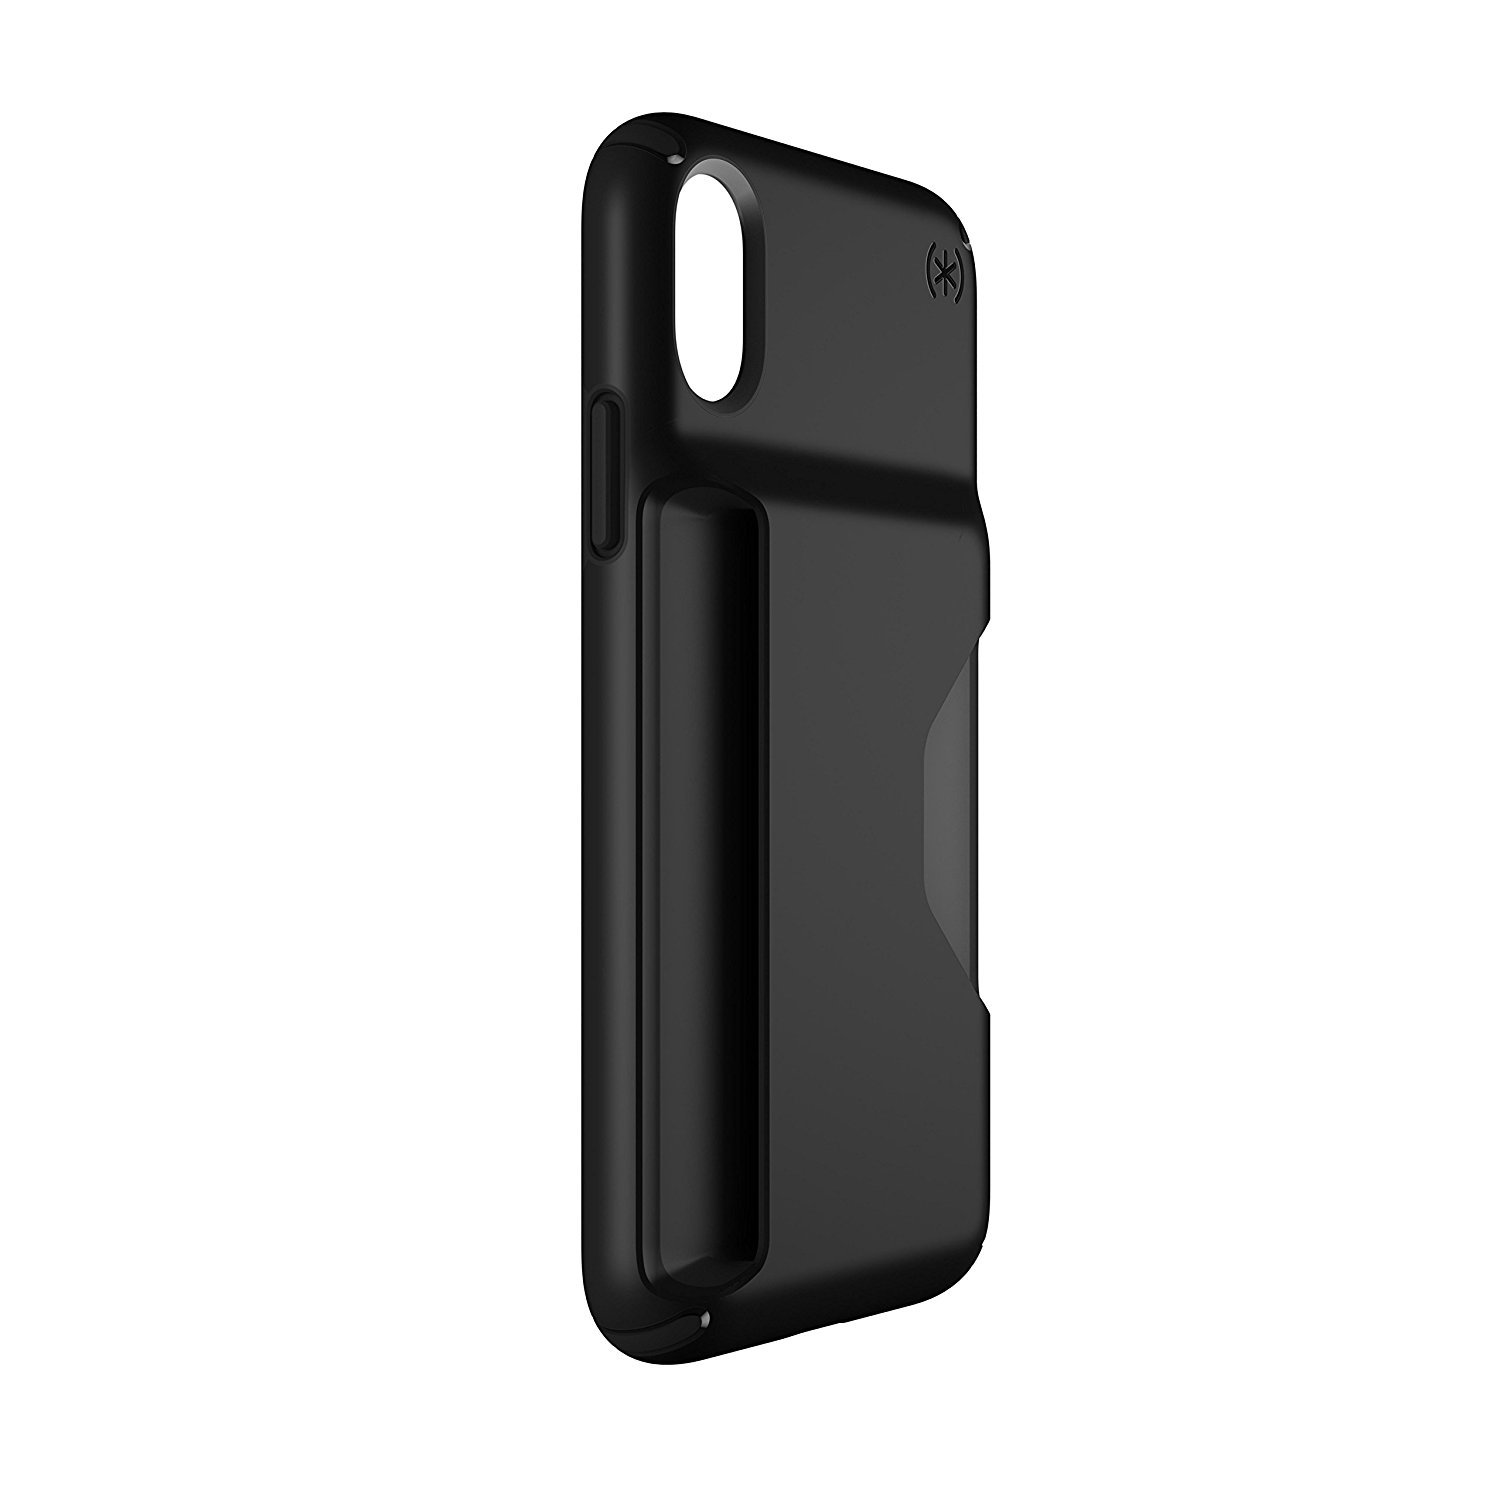 Speck Presidio iPhone X Tough Case - Black